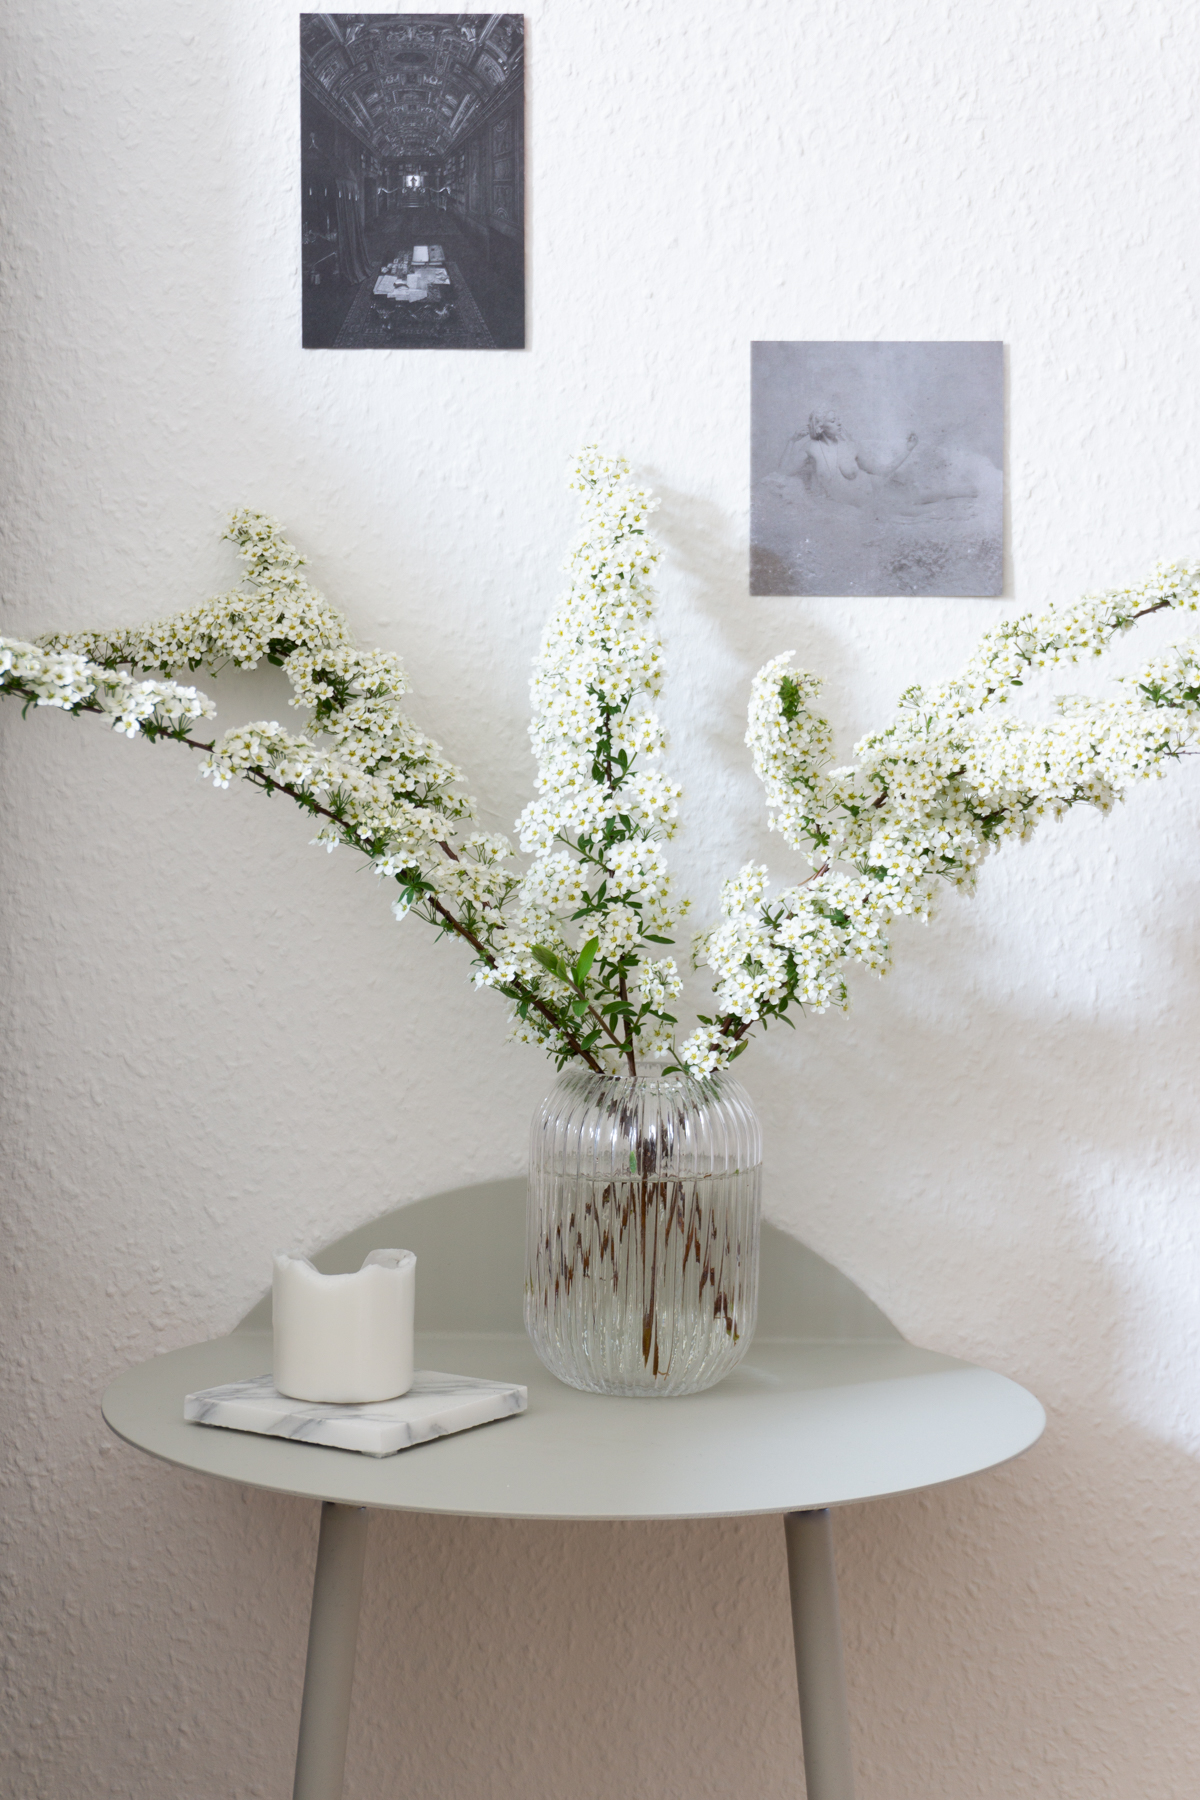 Scandinavian Bedroom, Minimalist Bedside Table, Fresh Flowers, Menu Yeh Wall Table - RG Daily Blog Interior Style